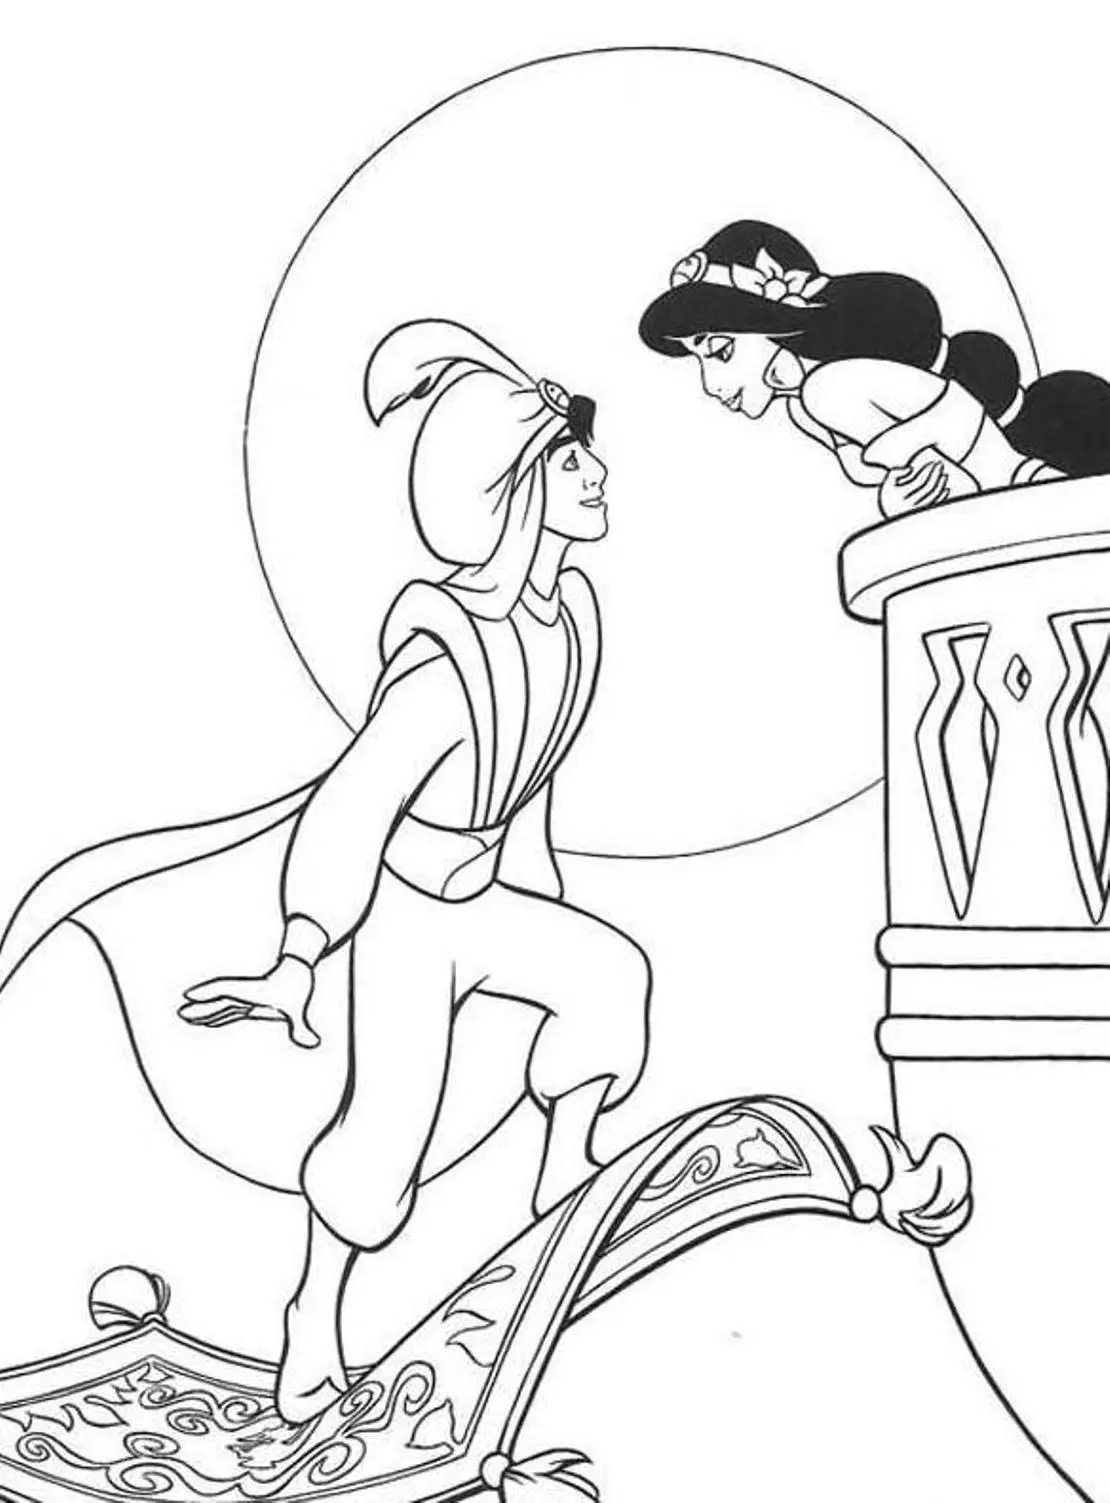 Aladdin joyful coloring